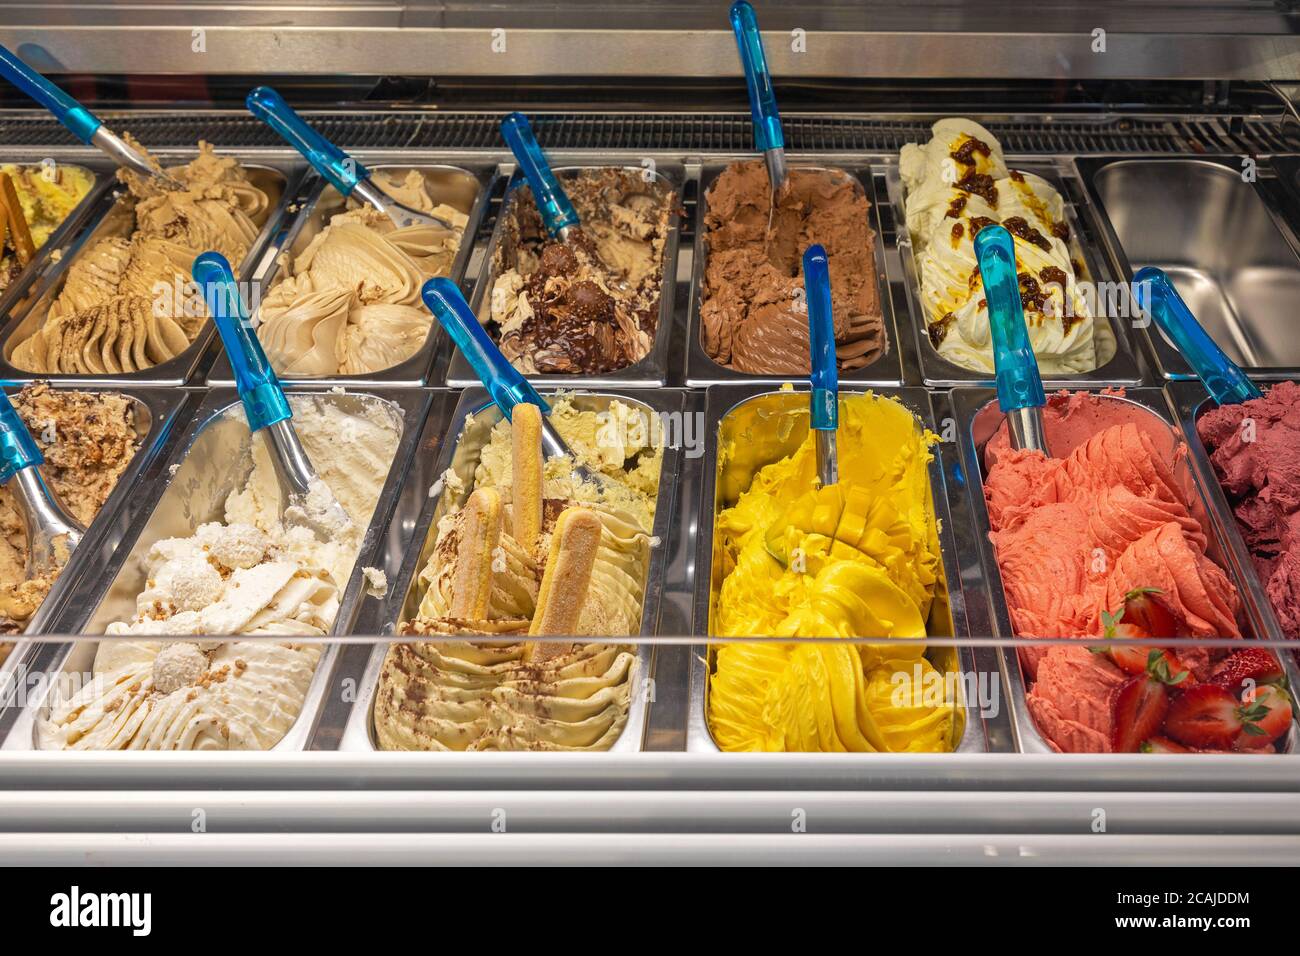 Italian Style Ice Cream Selection in Display Freezer Stock Photo - Alamy